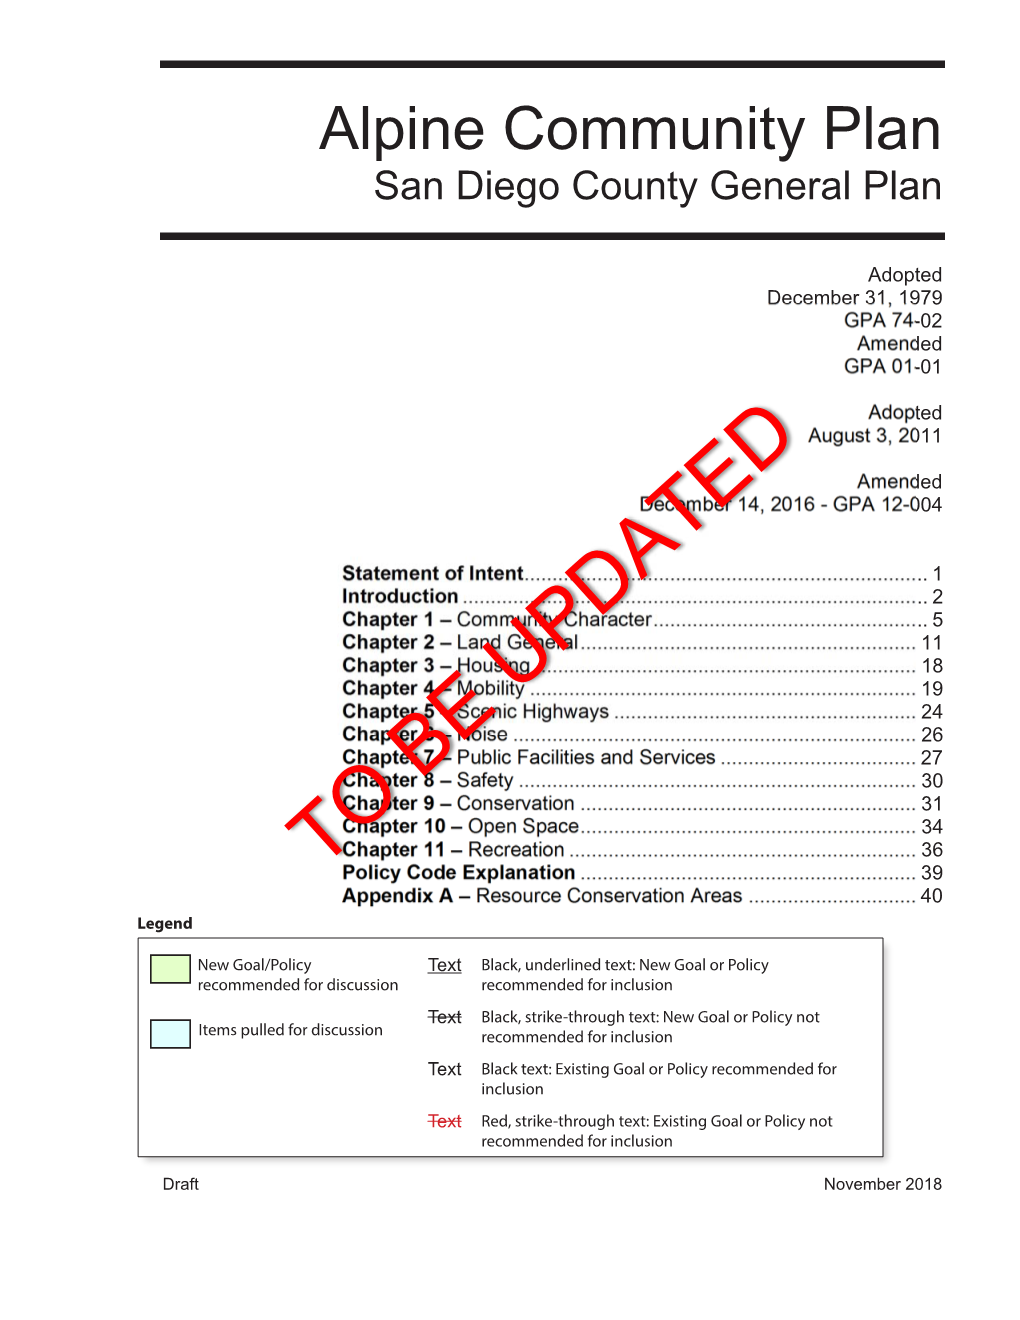 Alpine Community Plan San Diego County General Plan